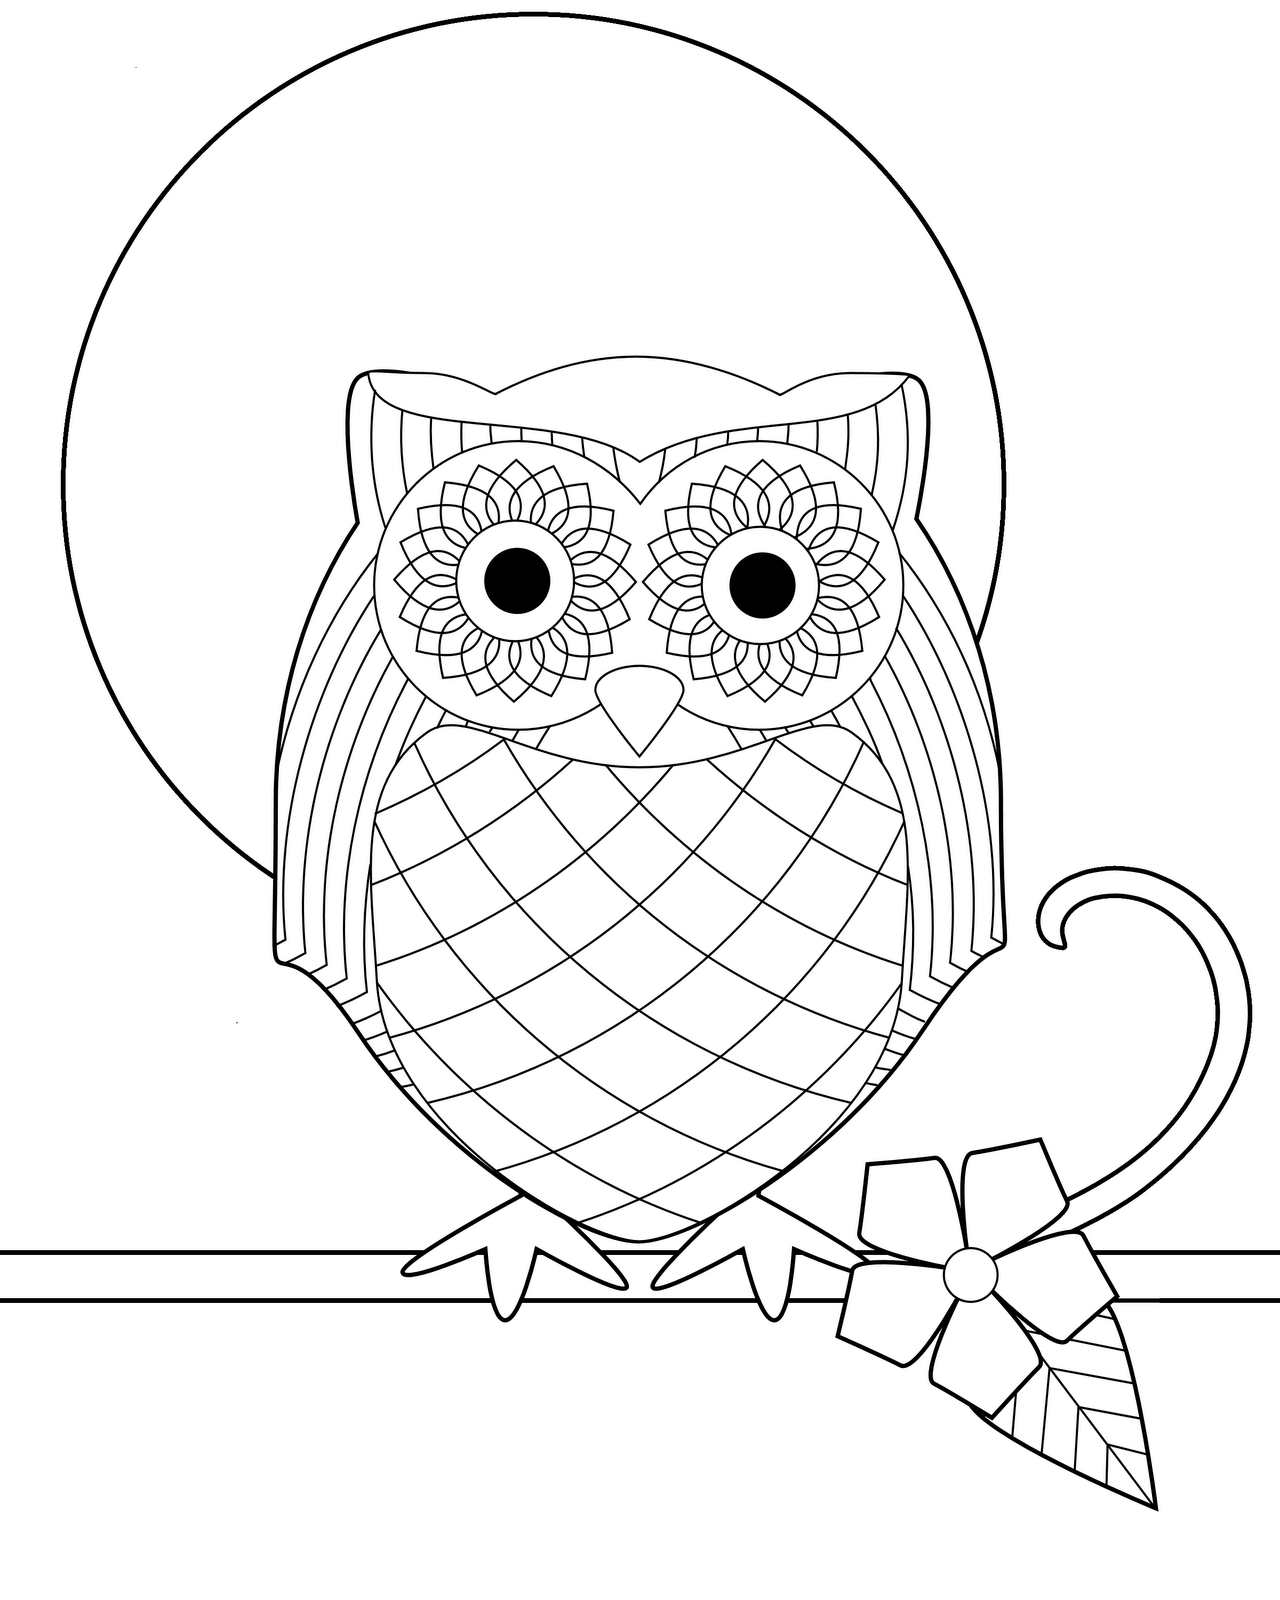 owl stencil printable painting